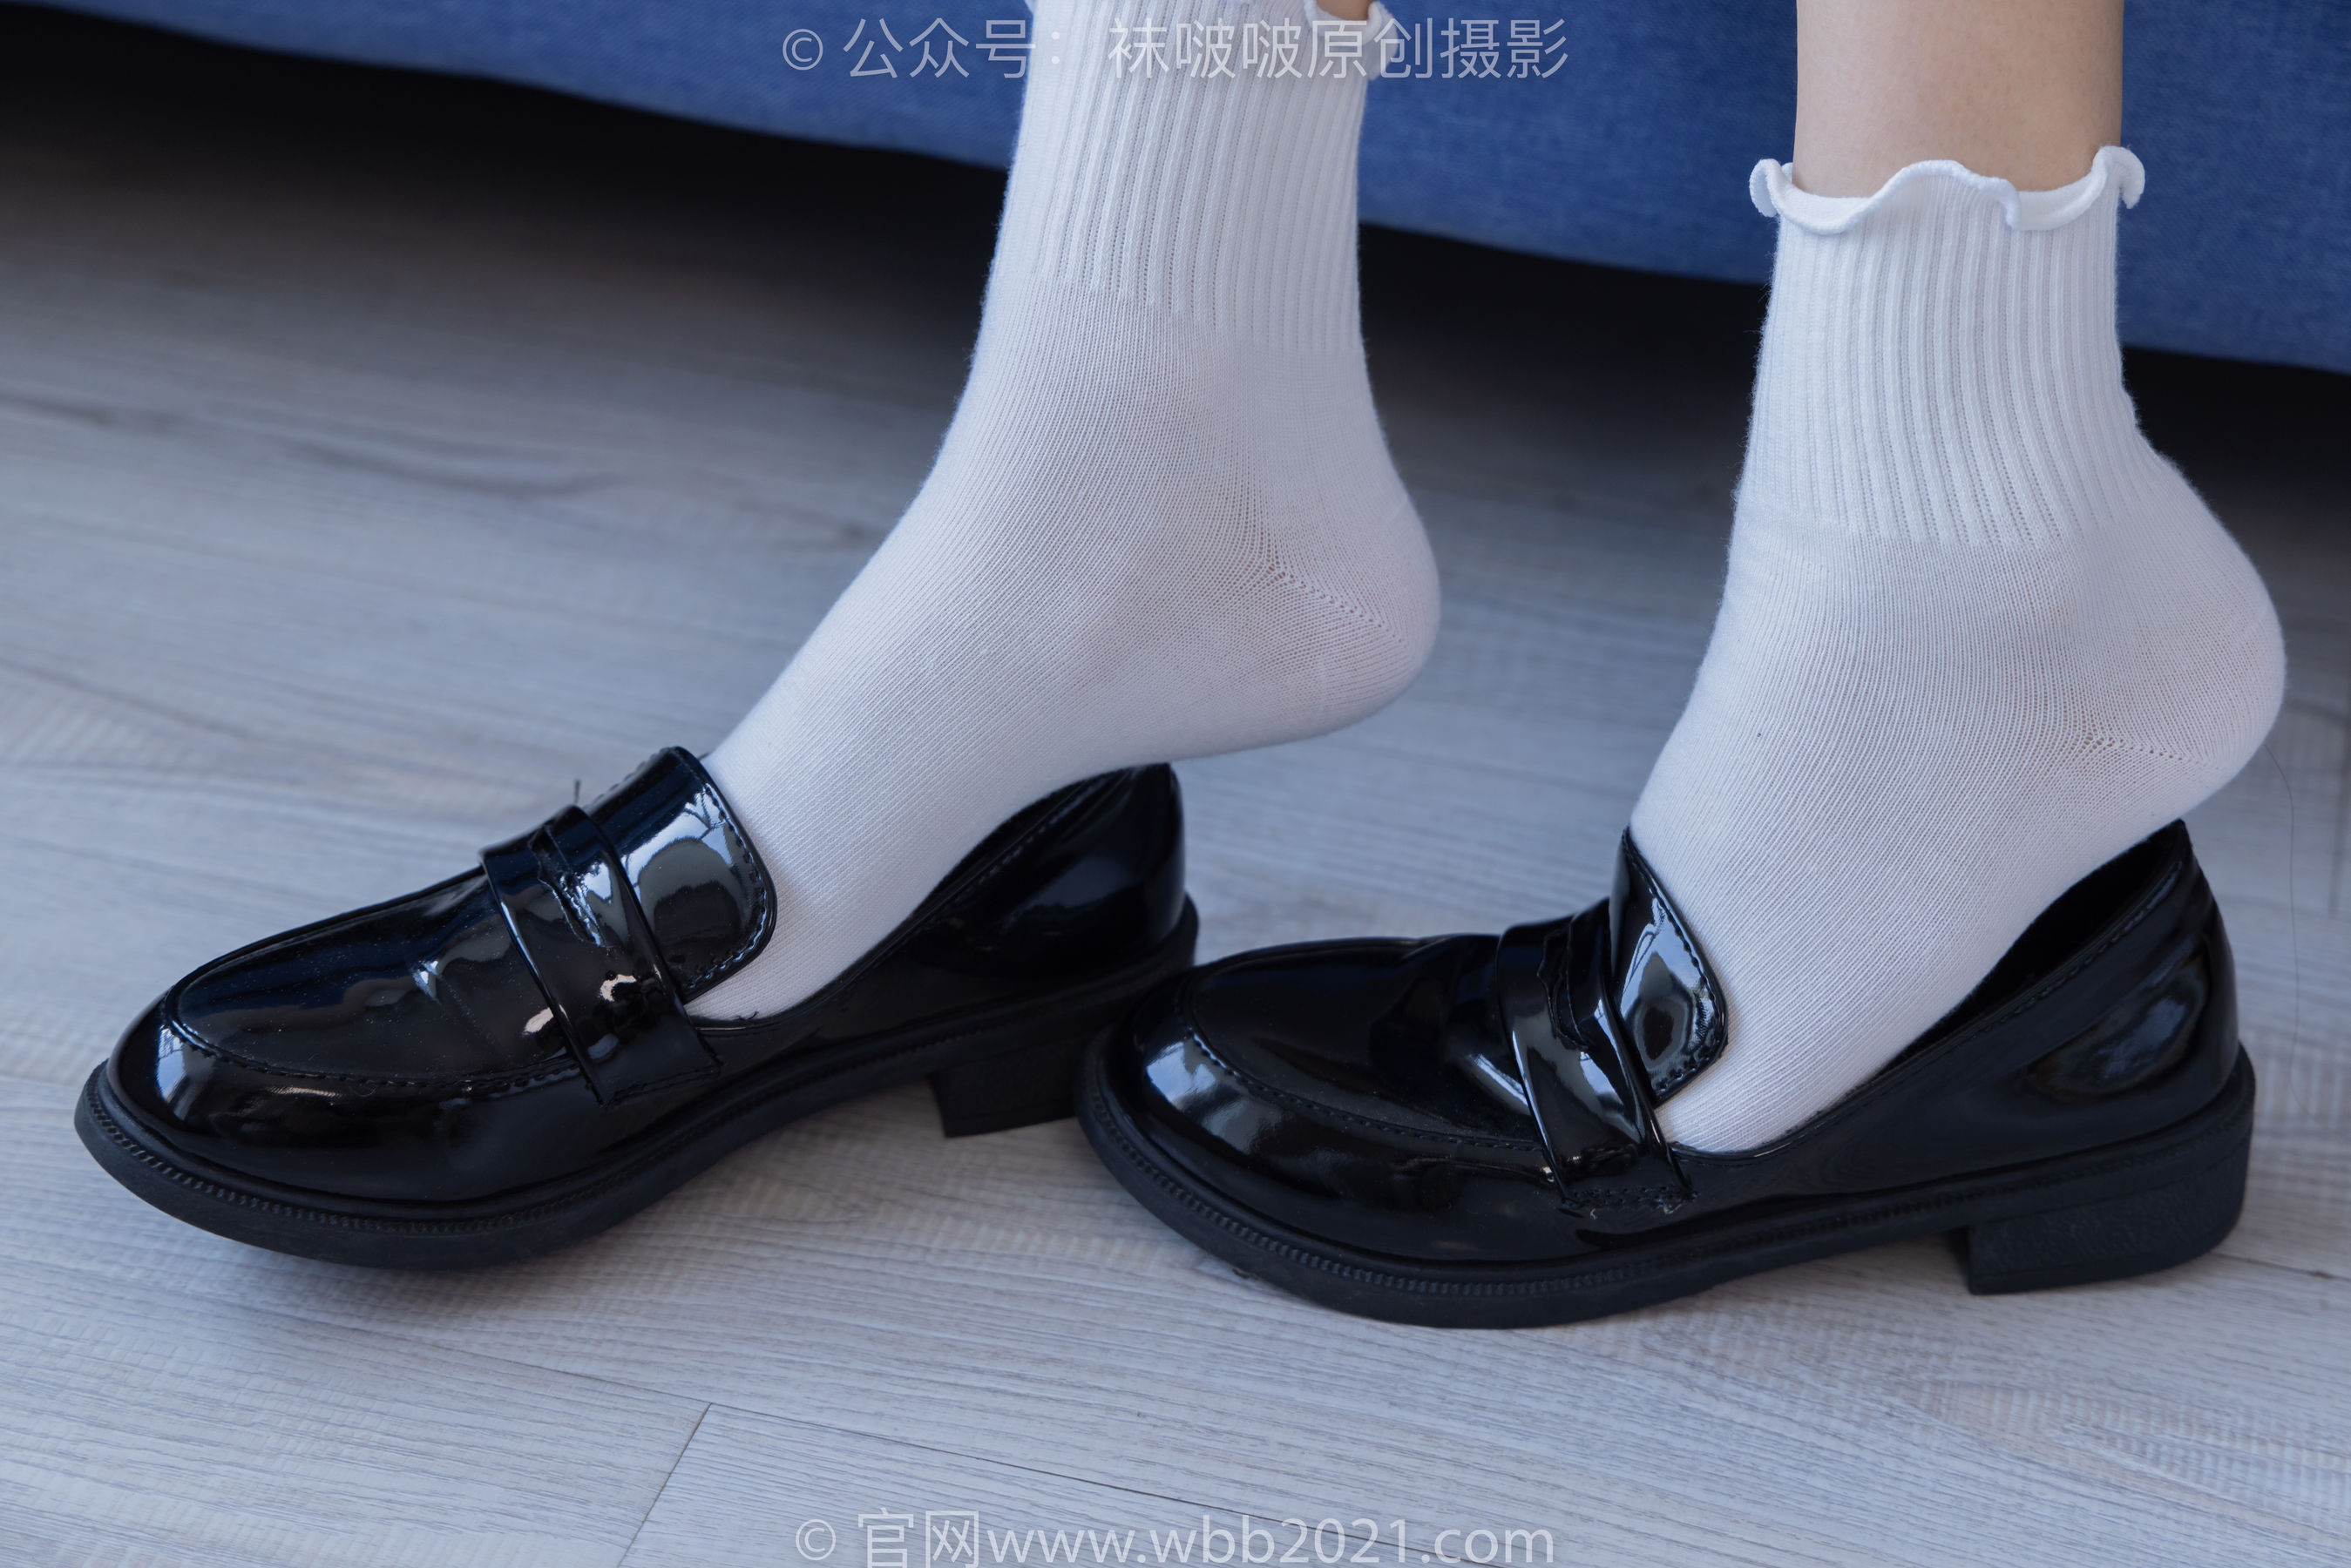 BoBoSocks袜啵啵 No.279 芝士 - 皮鞋、白棉袜、民国学生装/(145P)